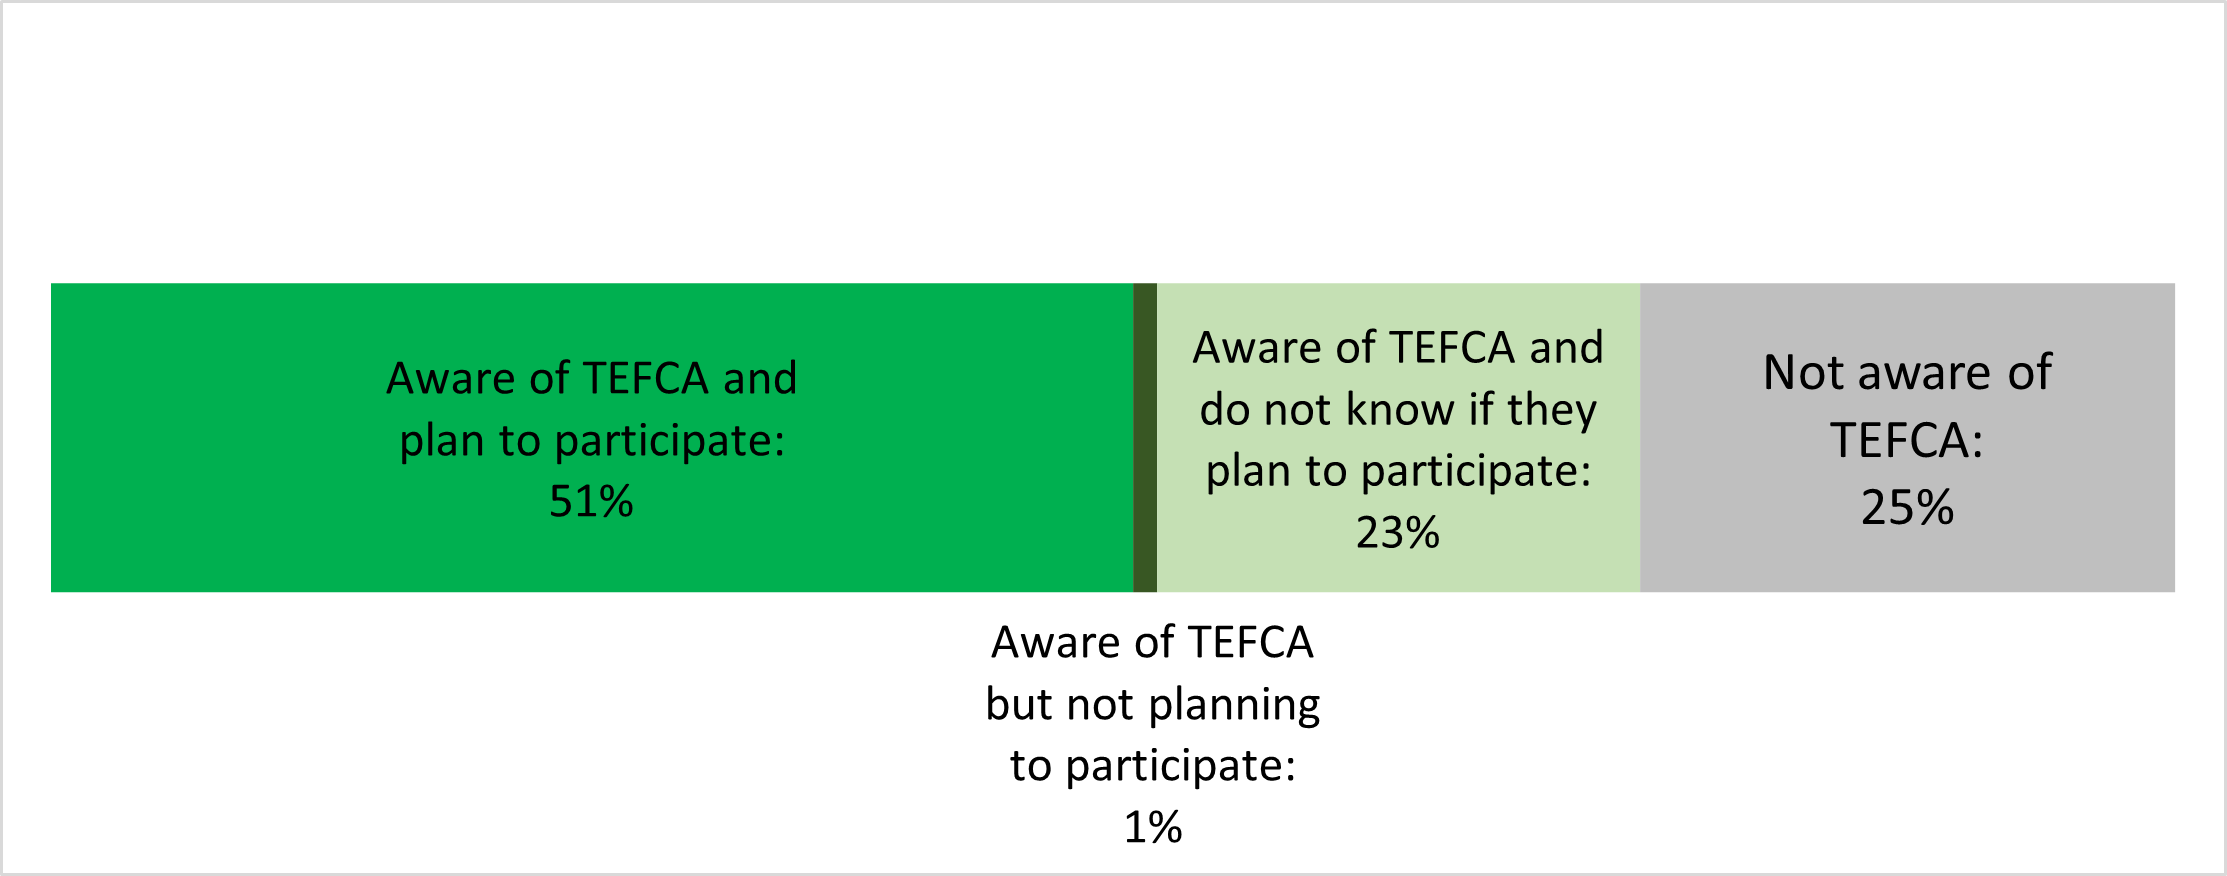 TEFCA Awareness Among Hospitals and Variations Regarding Intent to Participate